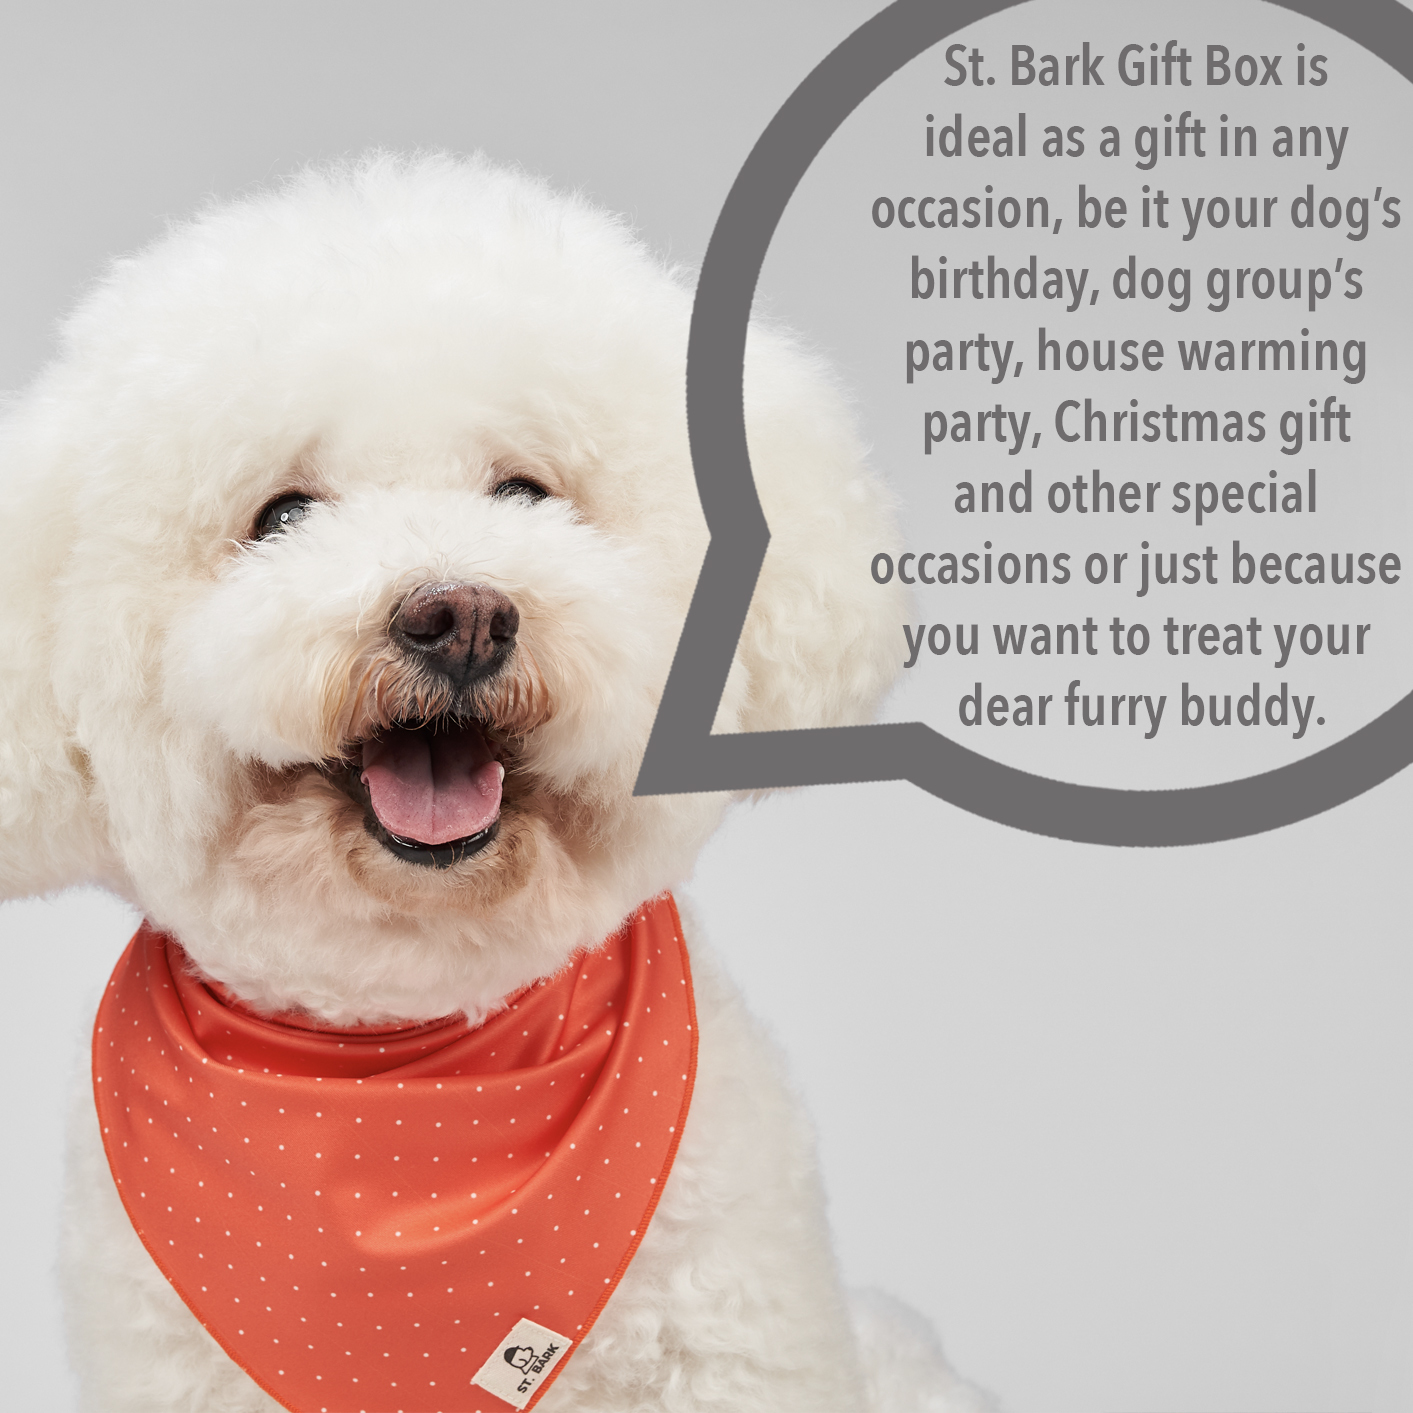 pet gift box customer service phone number